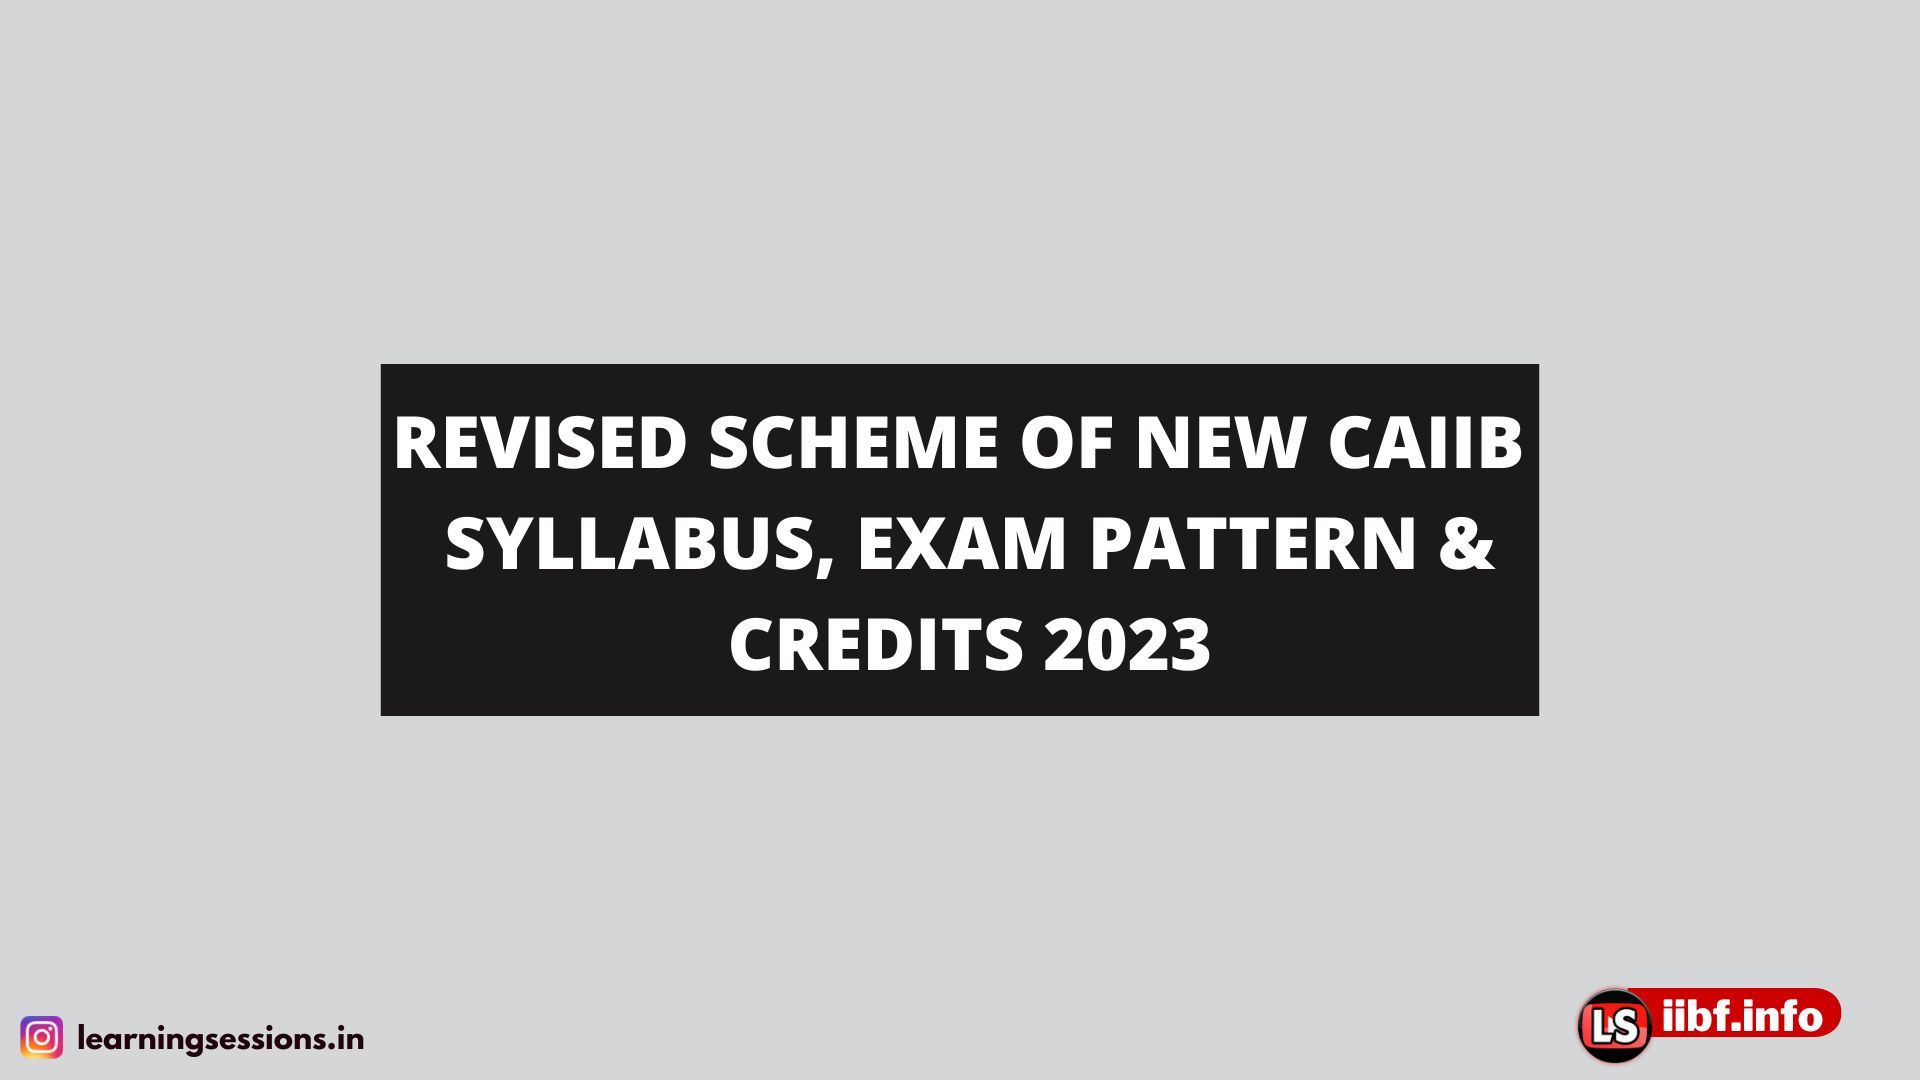 CAIIB REVISED SCHEME OF SYLLABUS, EXAM PATTERN & CREDITS 2023 | IIBF CAIIB EXAMS 2023